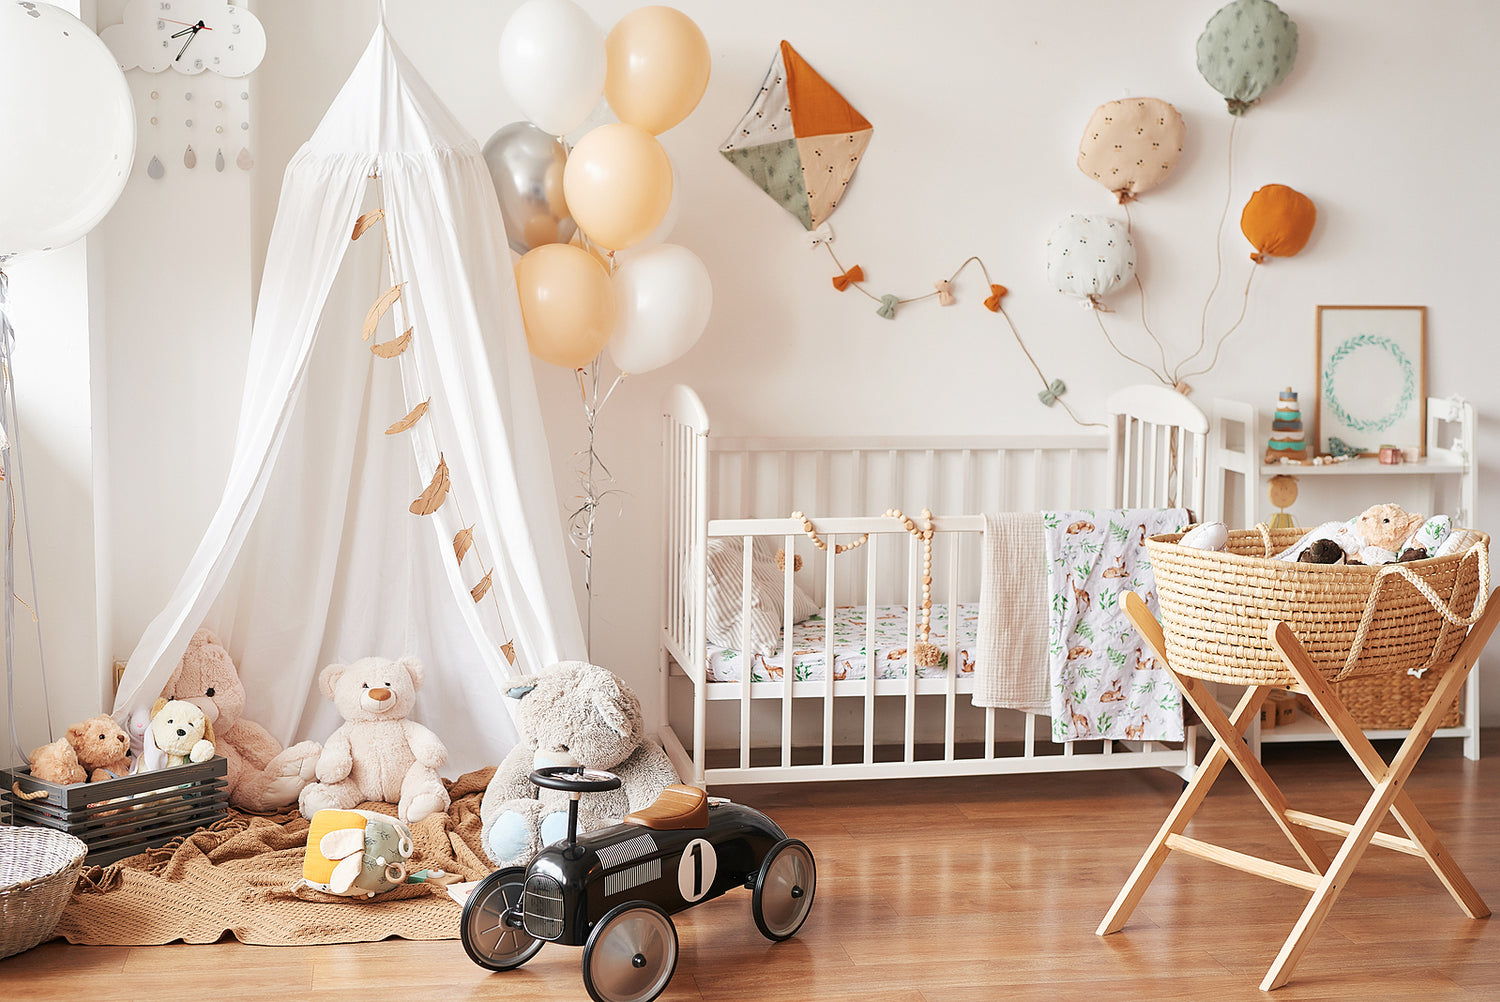 The Baby Shop: Baby Furniture & Nursery Decor